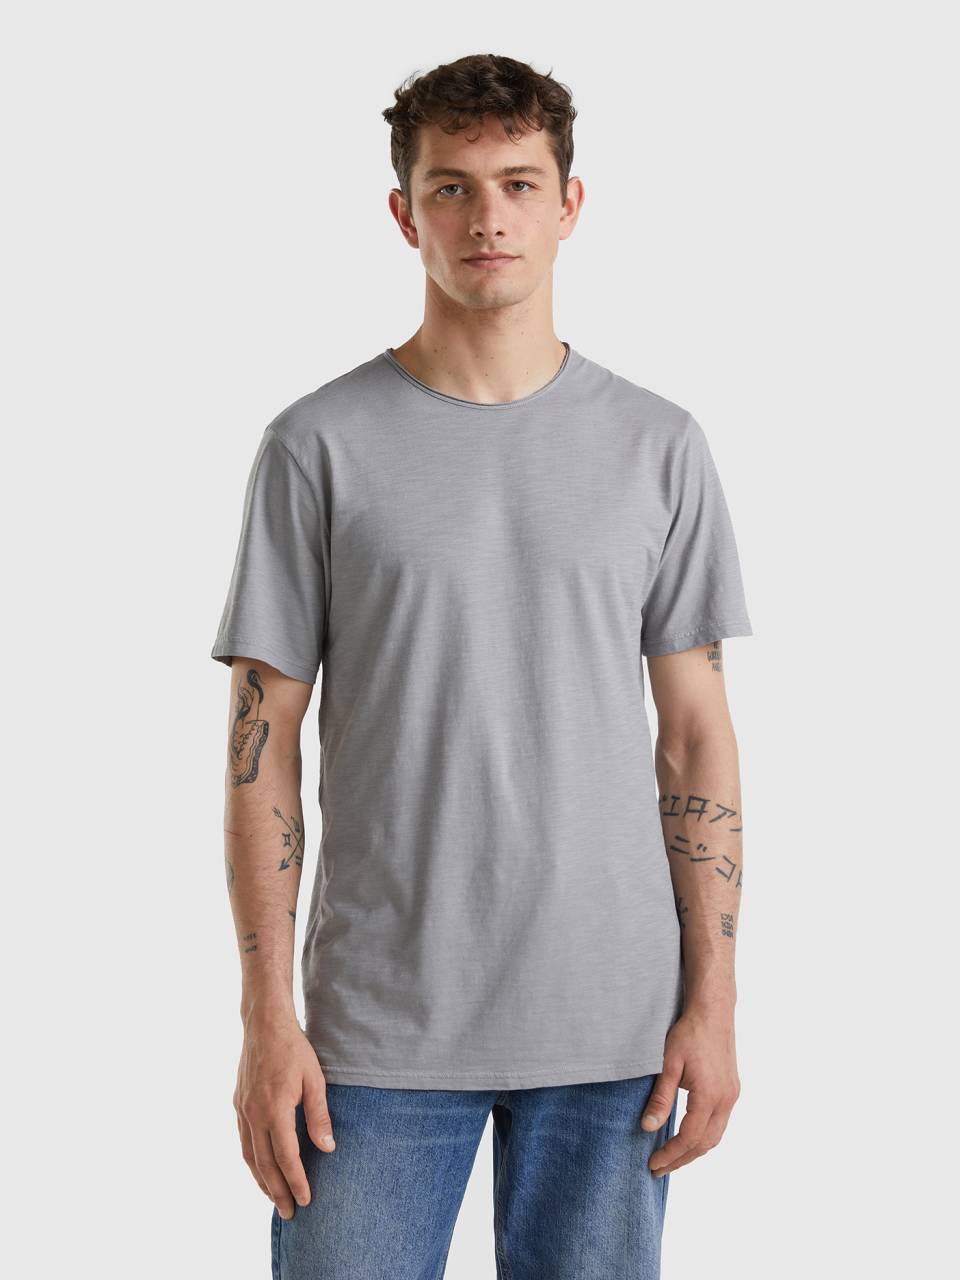 Benetton gray t-shirt in slub cotton. 1